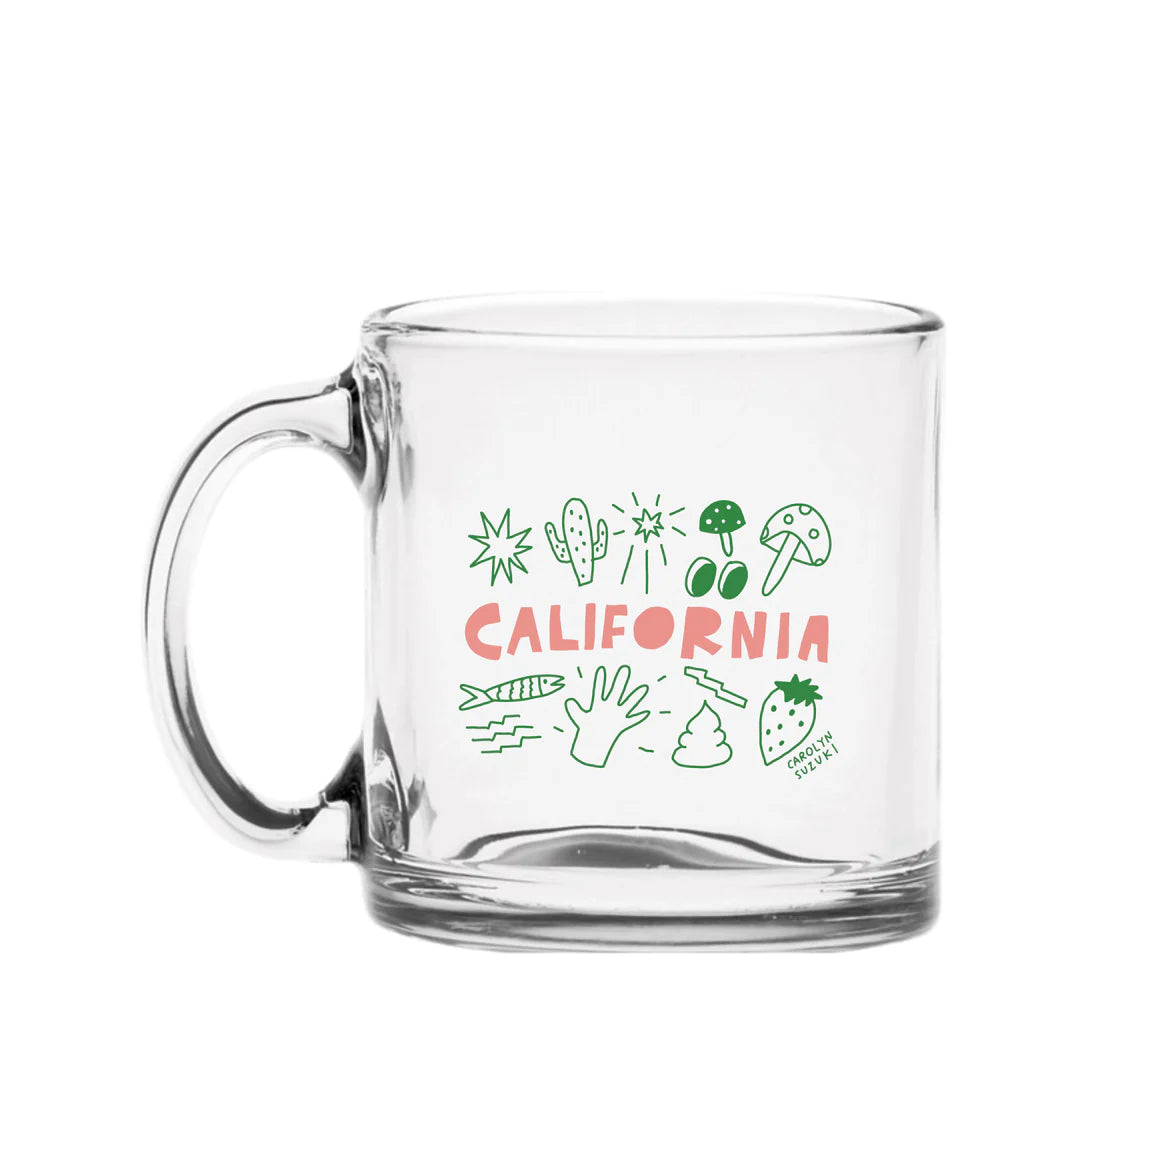 Cali Glass Mug